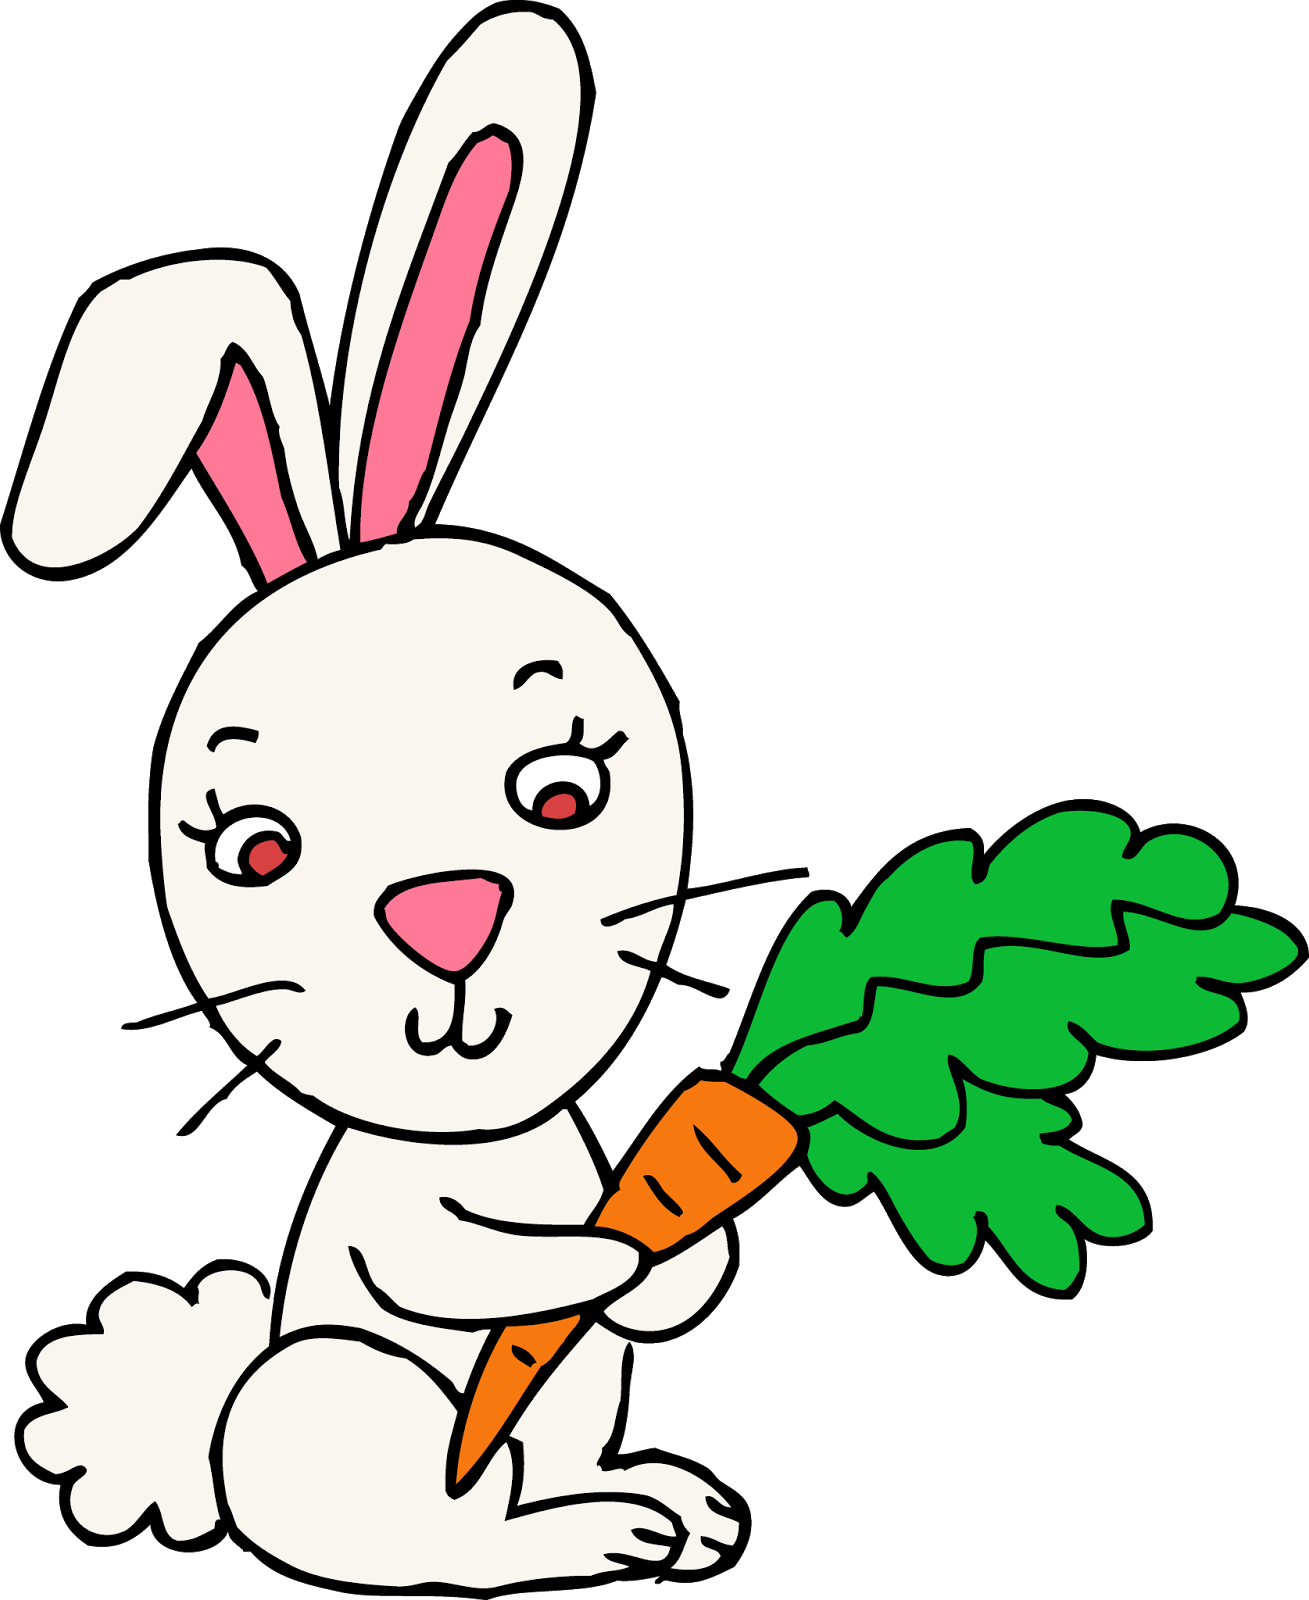 Lumberjack clipart cartoon. Easter bunny rabbit white